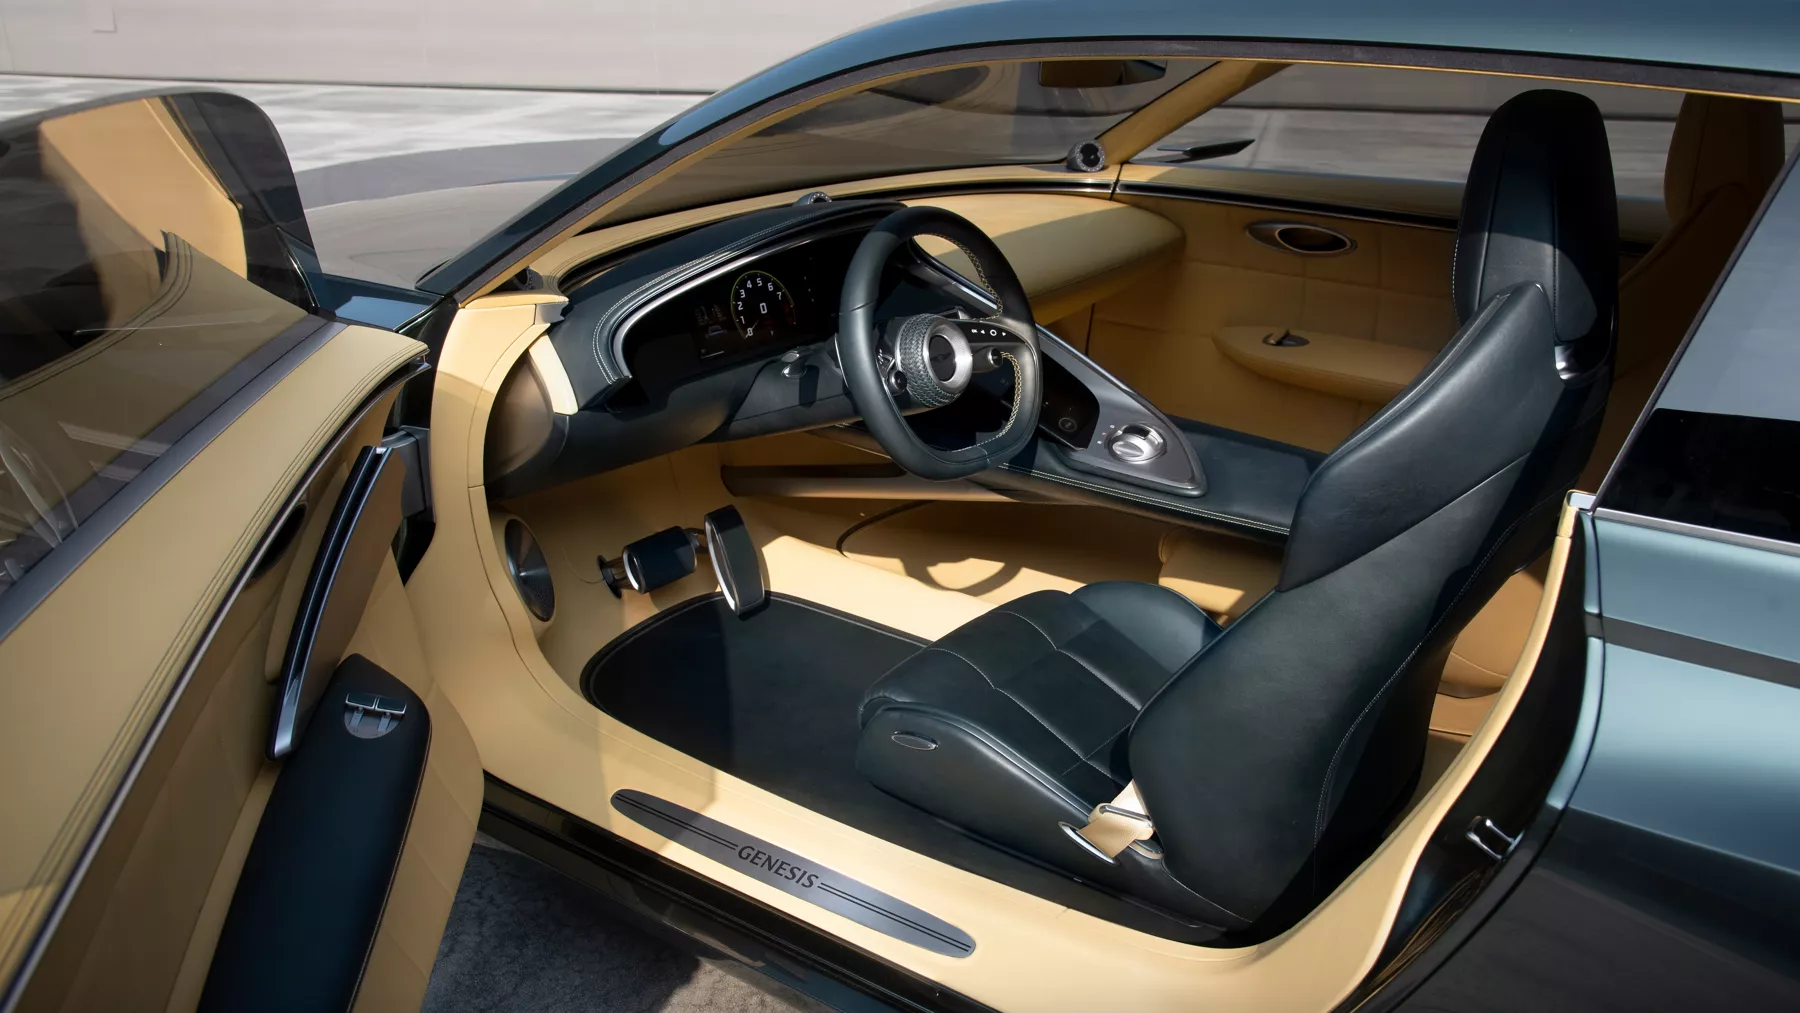 X Speedium Coupe Concept driver’s seat and steering wheel.